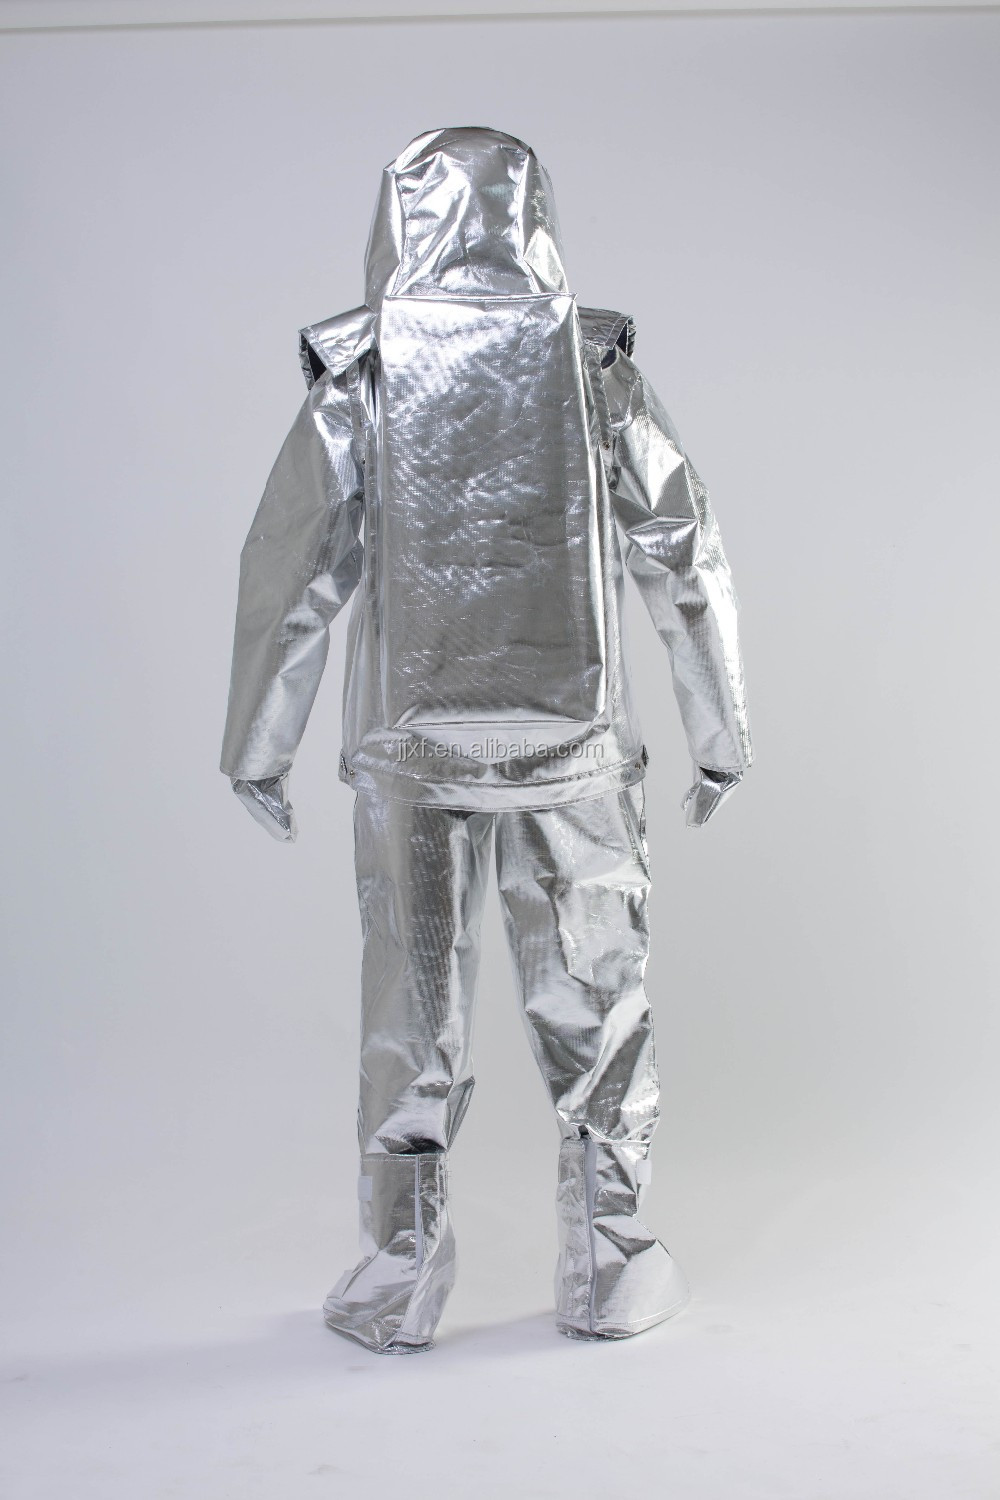  Low Price Fire Proof Suit Aluminum Heat Resistant Suit for Firefighter